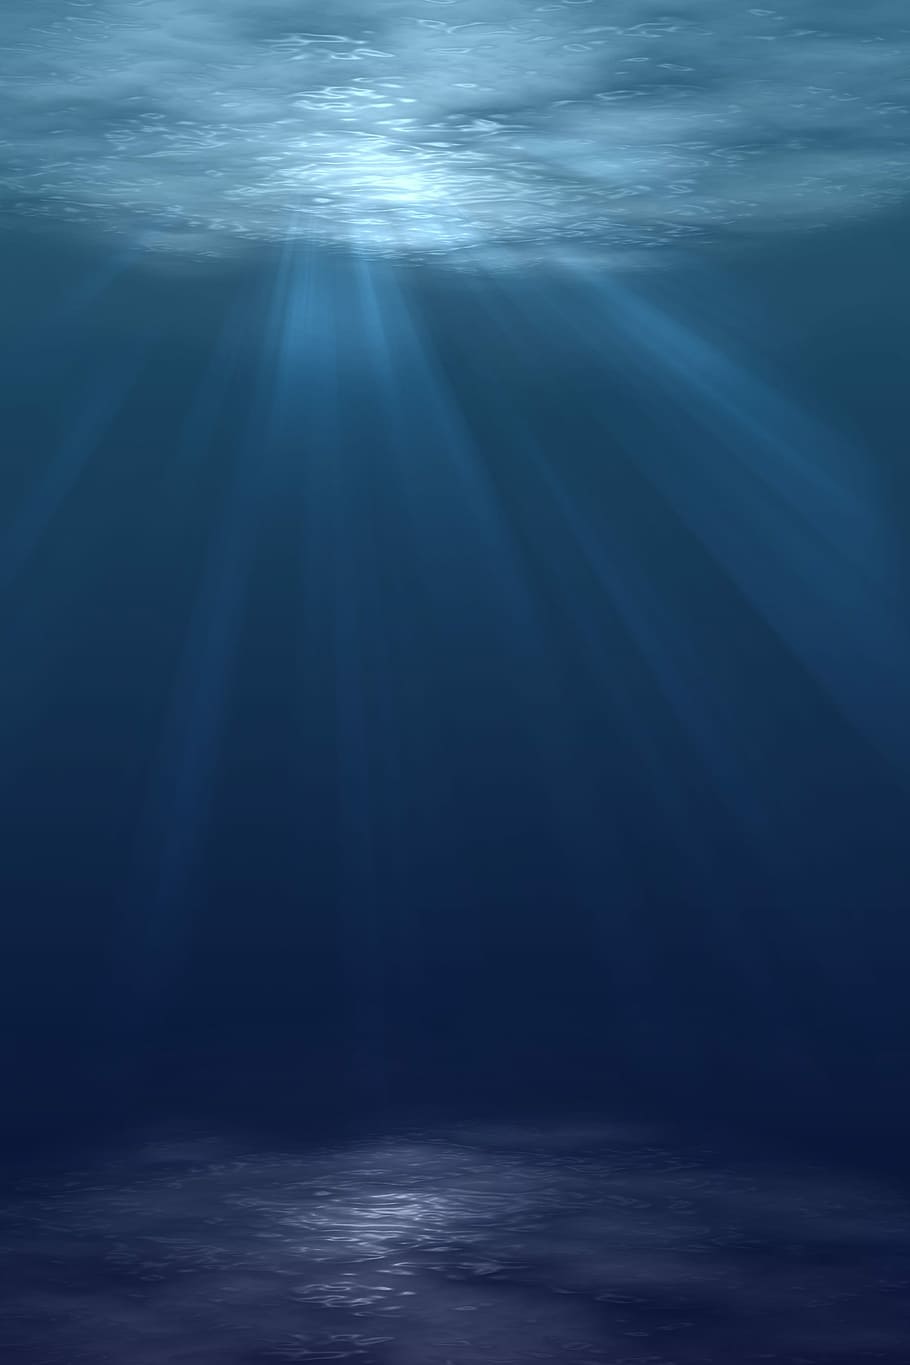 deep sea photo, nature, sea, ocean, water, sunlight, waves, dark, storm, blue